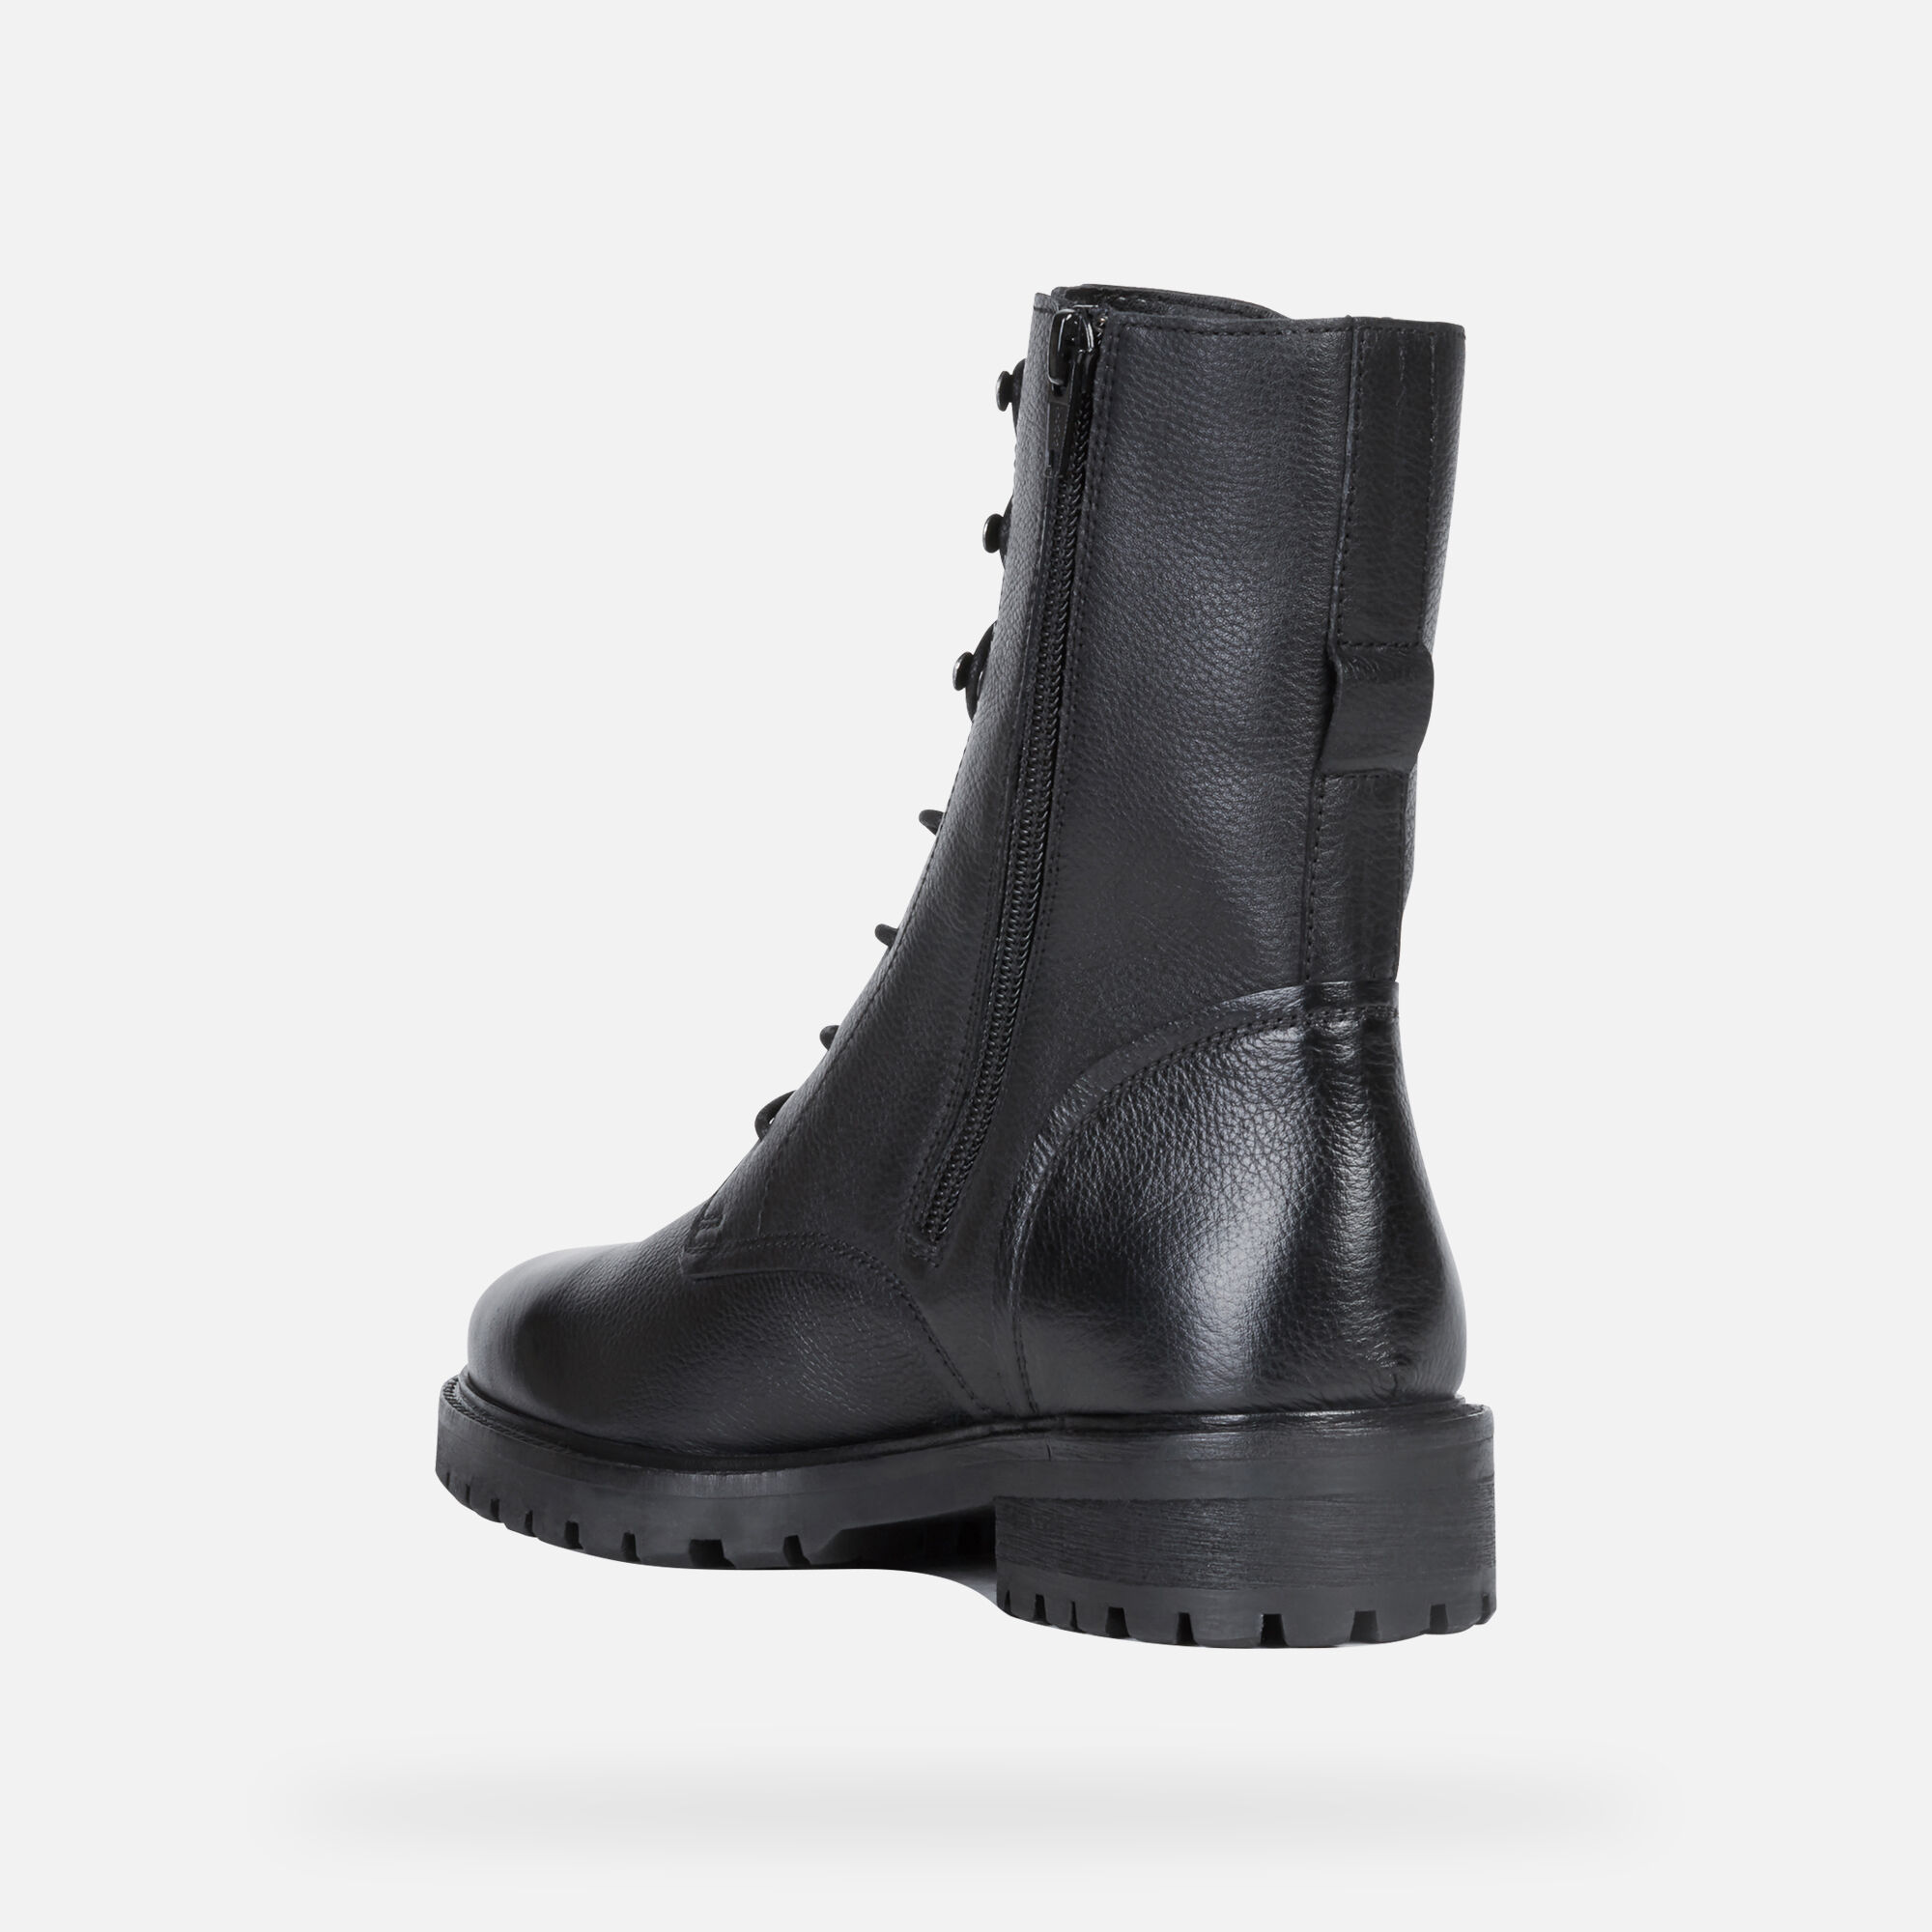 Geox HOARA Woman: Black Ankle Boots | Geox® FW20/21